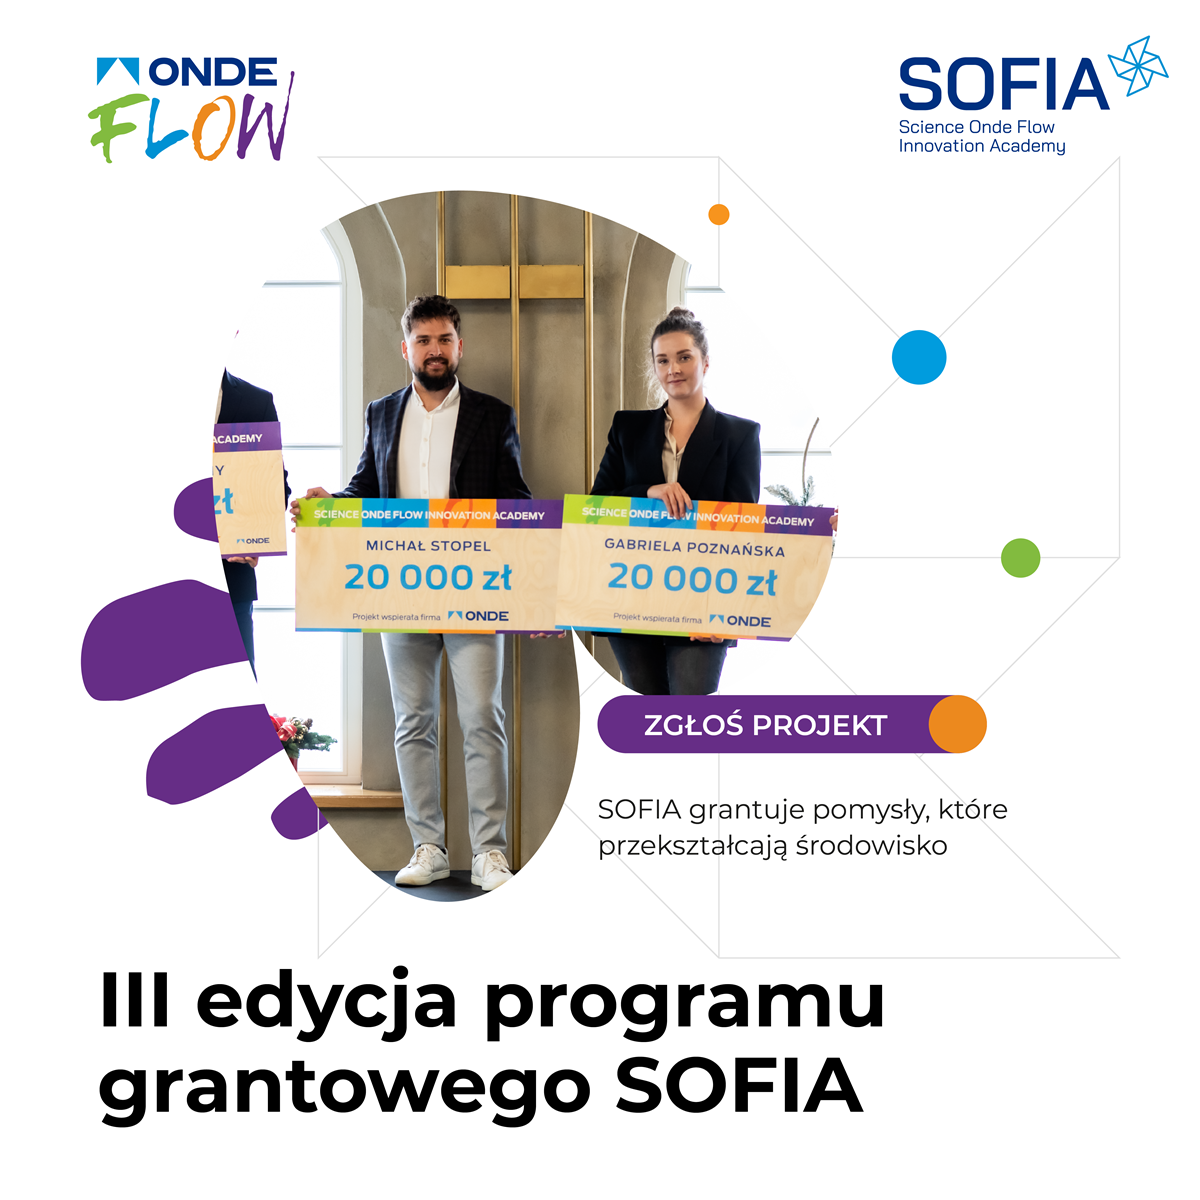 Startuje kolejna edycja programu grantowego SOFIA